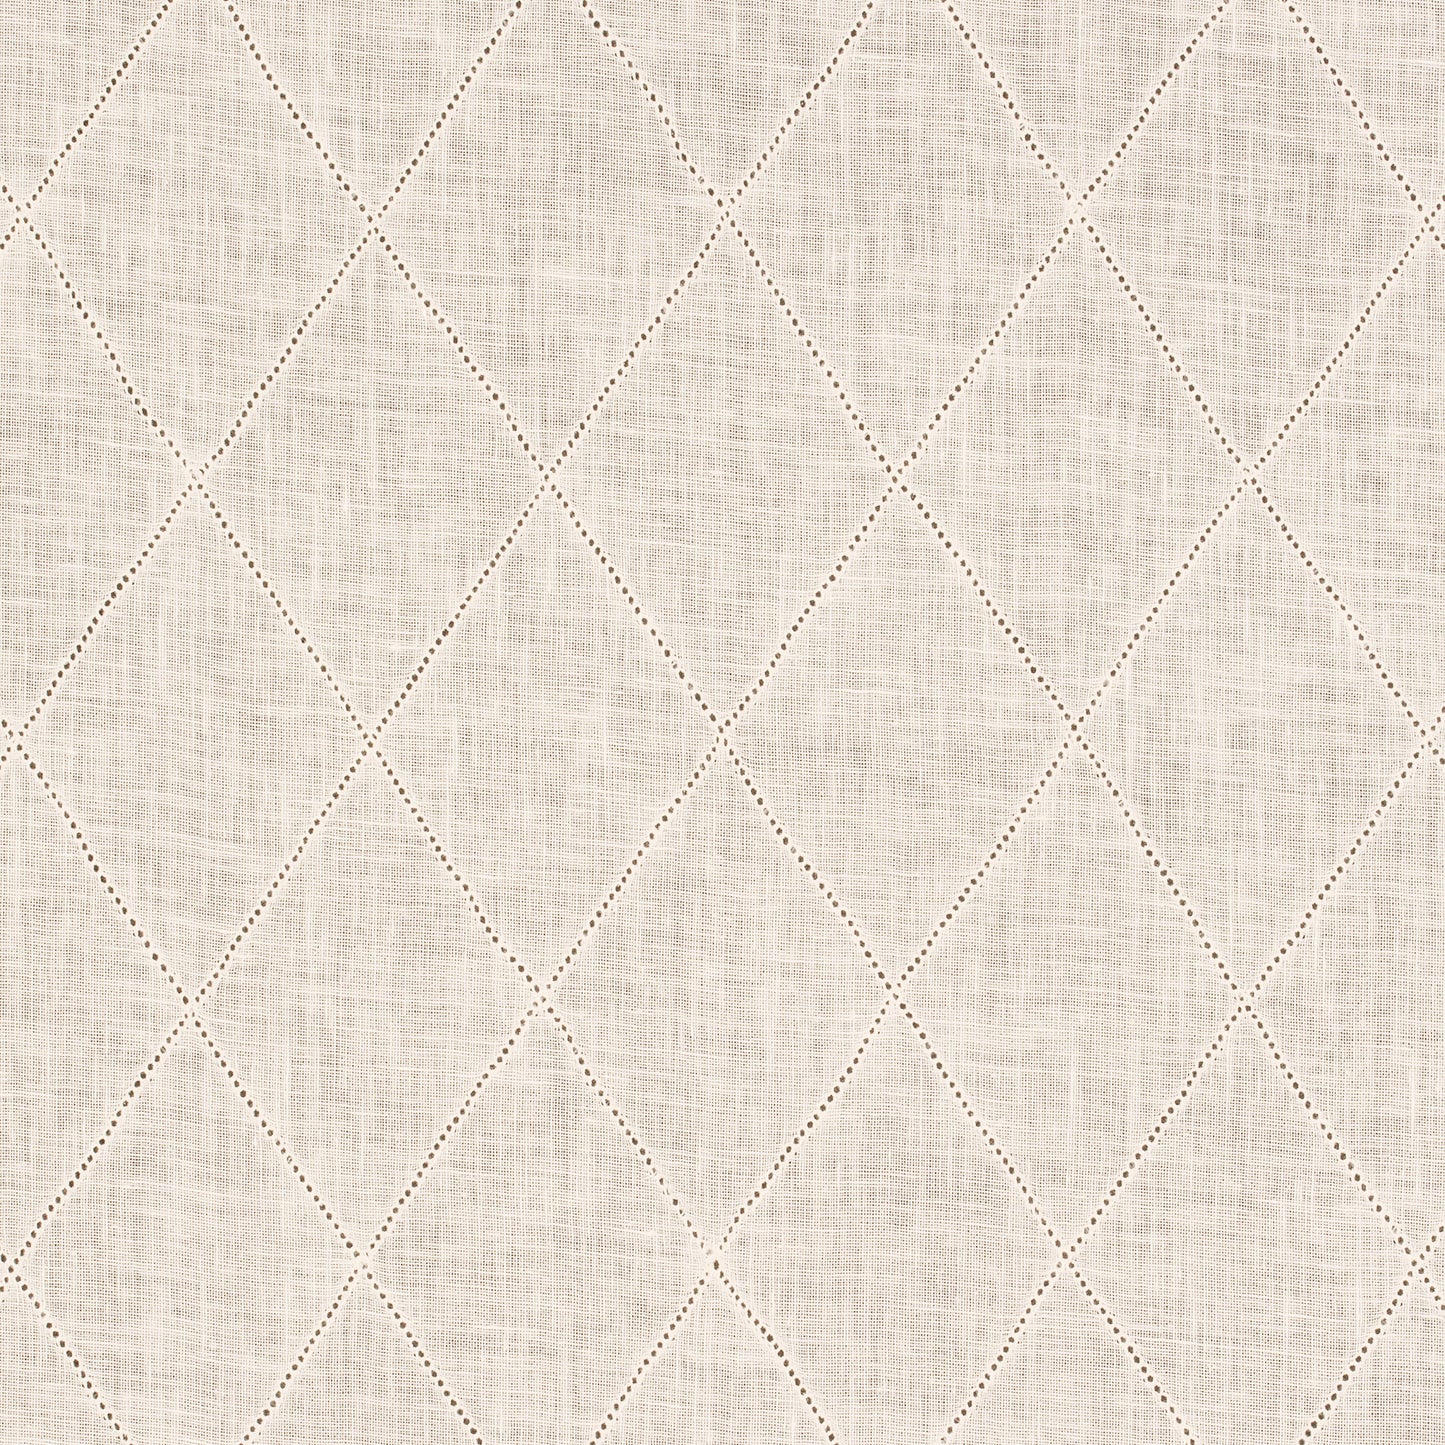 Purchase Thibaut Fabric Item# W772588 pattern name Claremont Trellis color Ivory